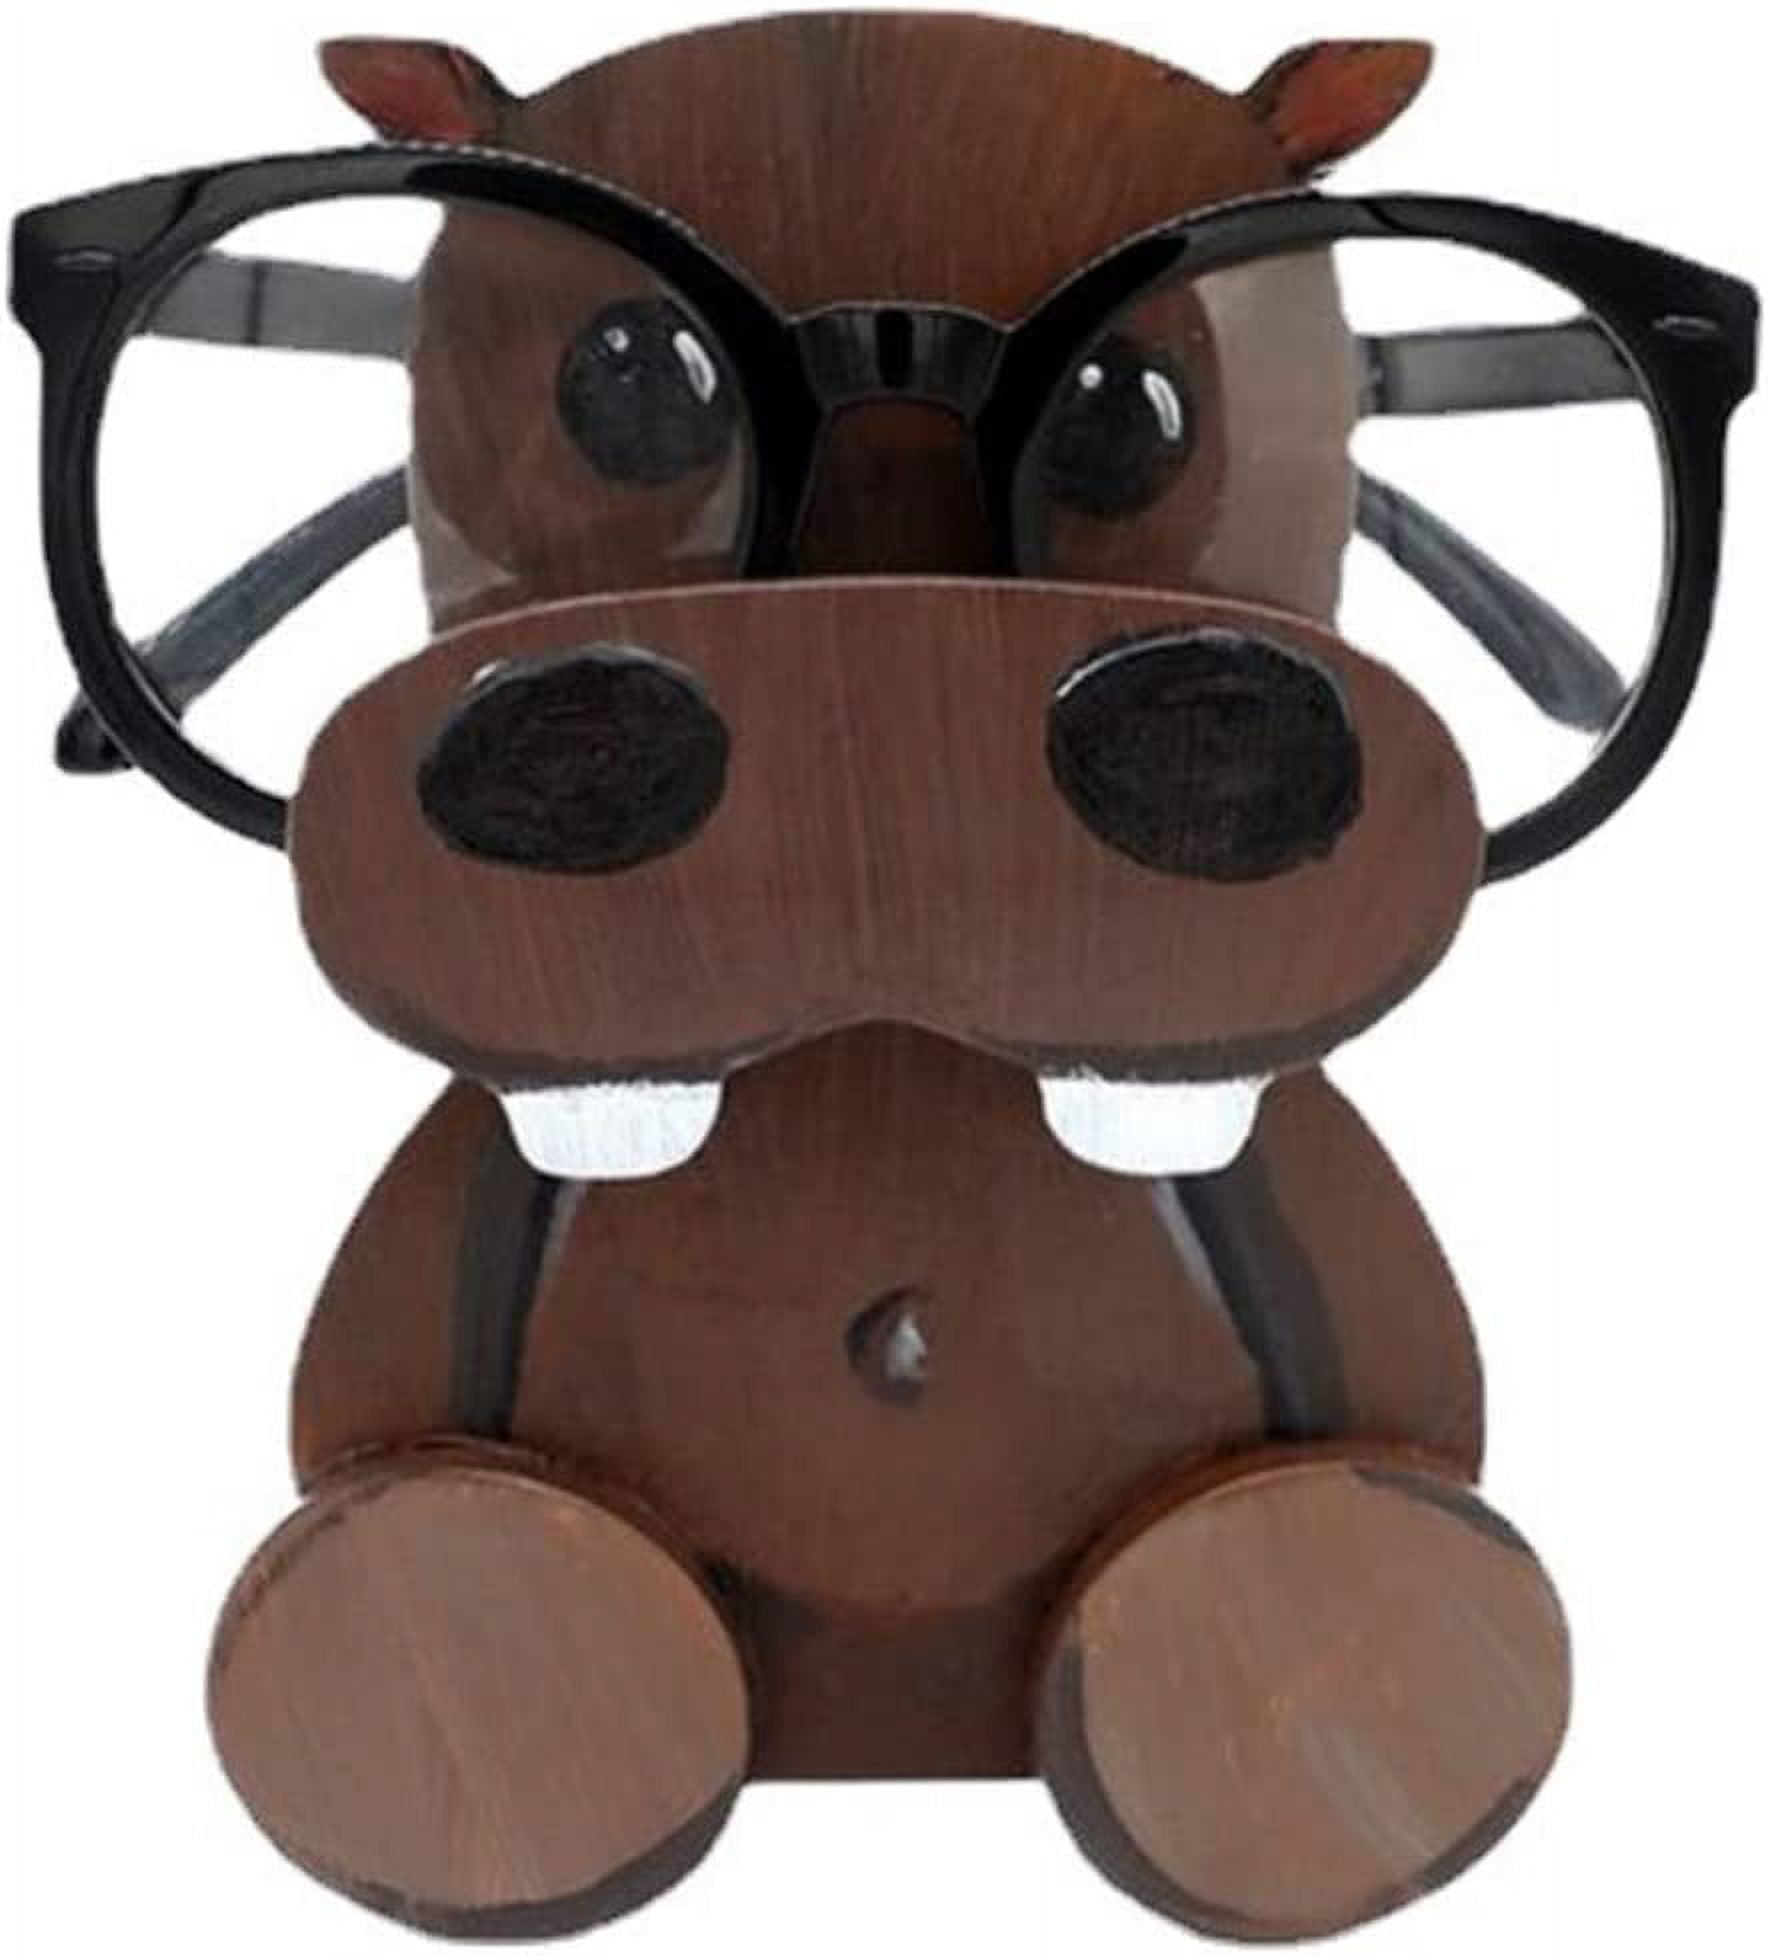 IUIBMI Wooden Glasses Holder Stand Fun Animal Eyeglass Holder